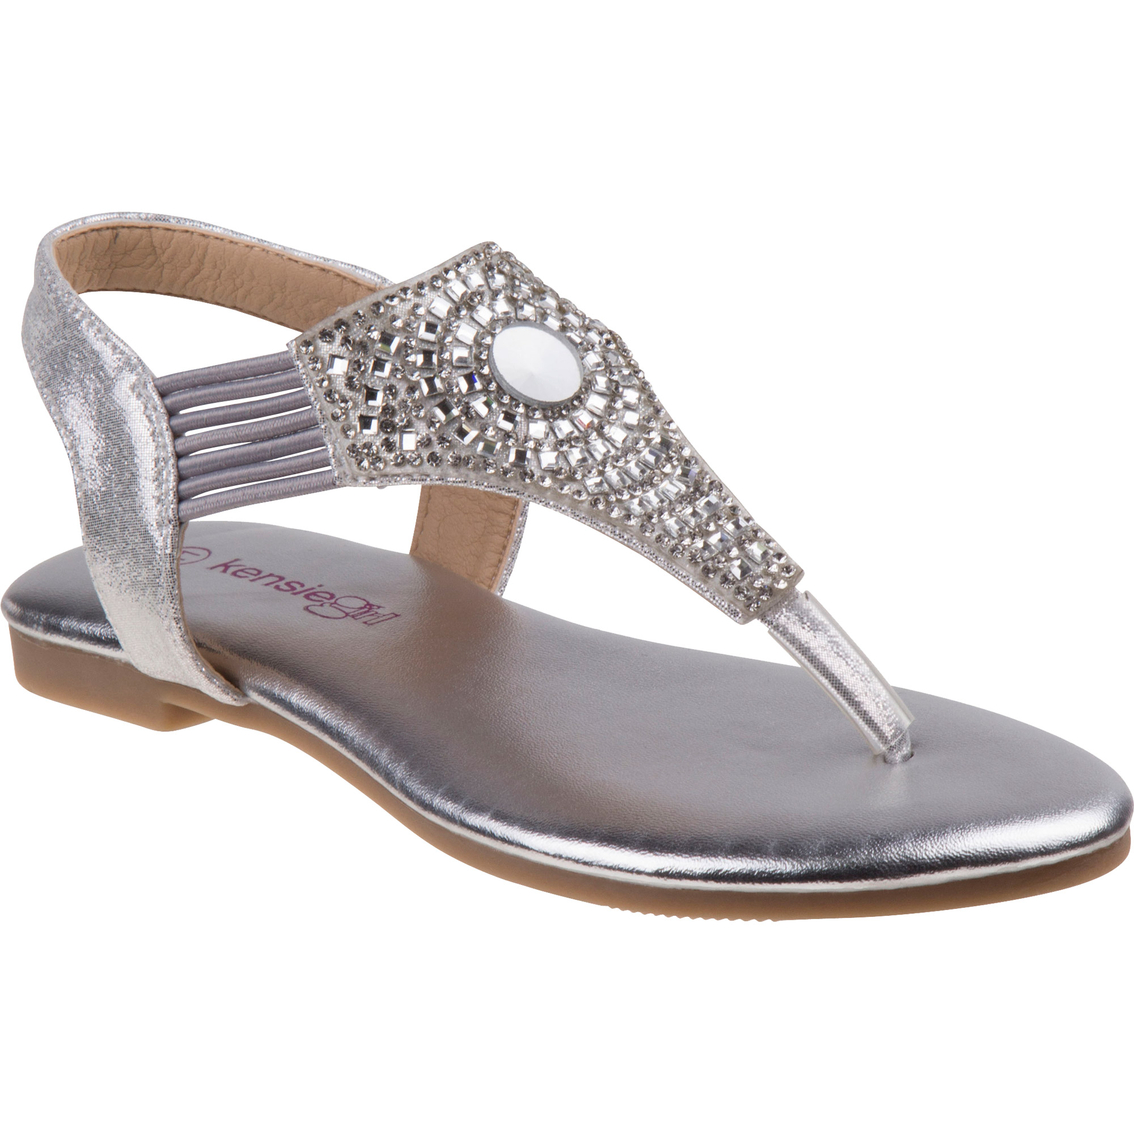 Kensie Girls Silver Thong Sandals | Sandals | Back To School Shop ...